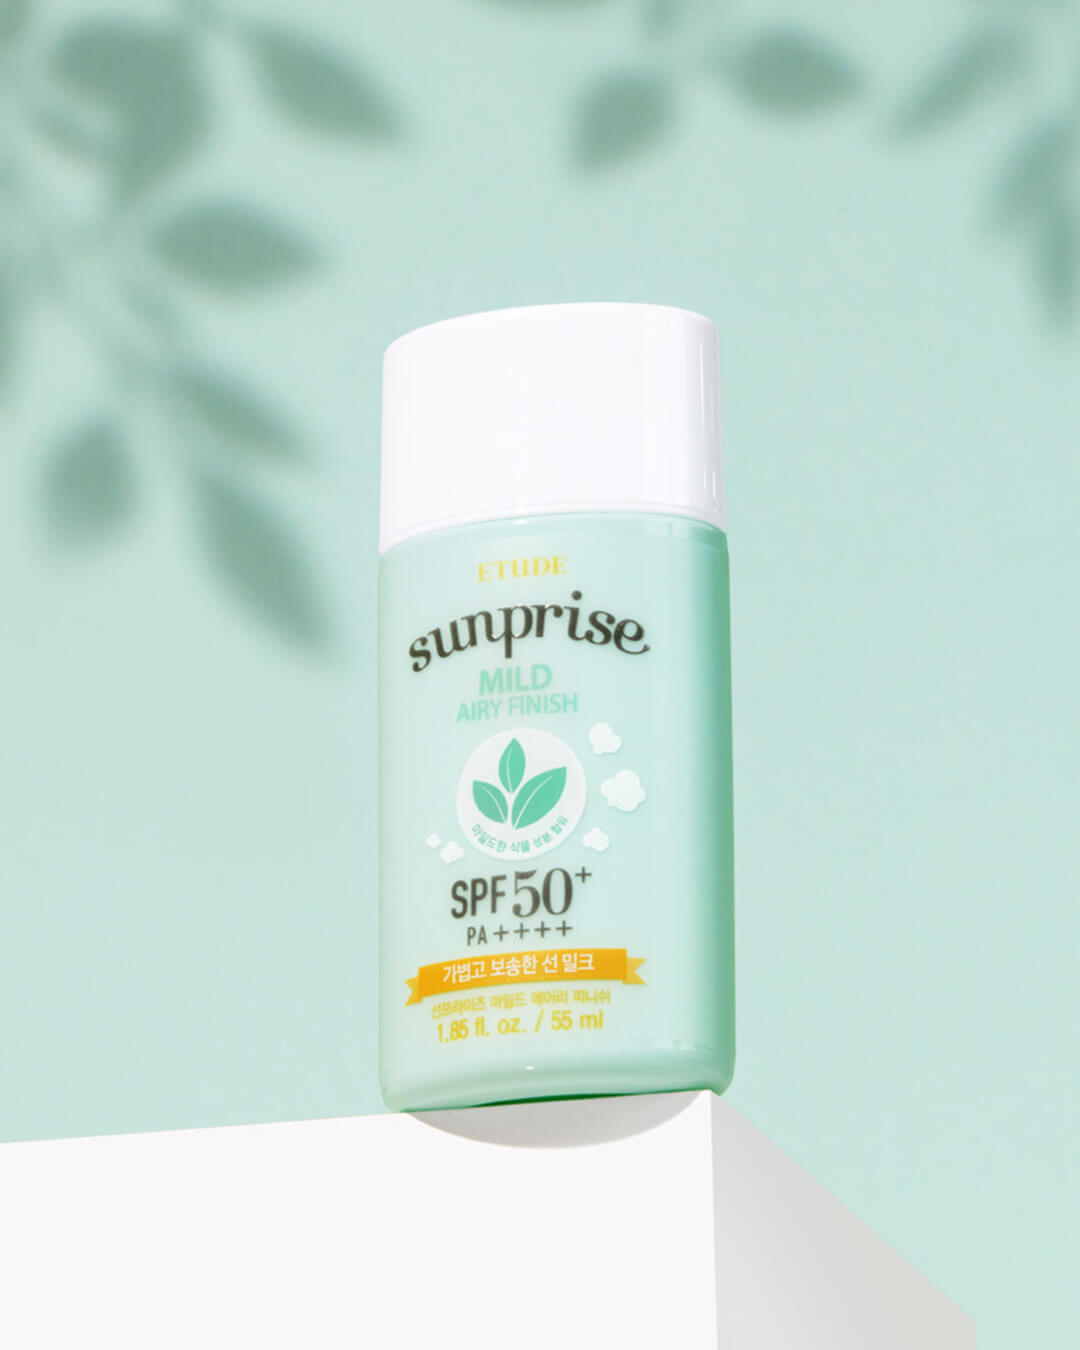 Ohlolly K-Beauty Skincare Etude Sunprise Mild Airy Finish SPF50+